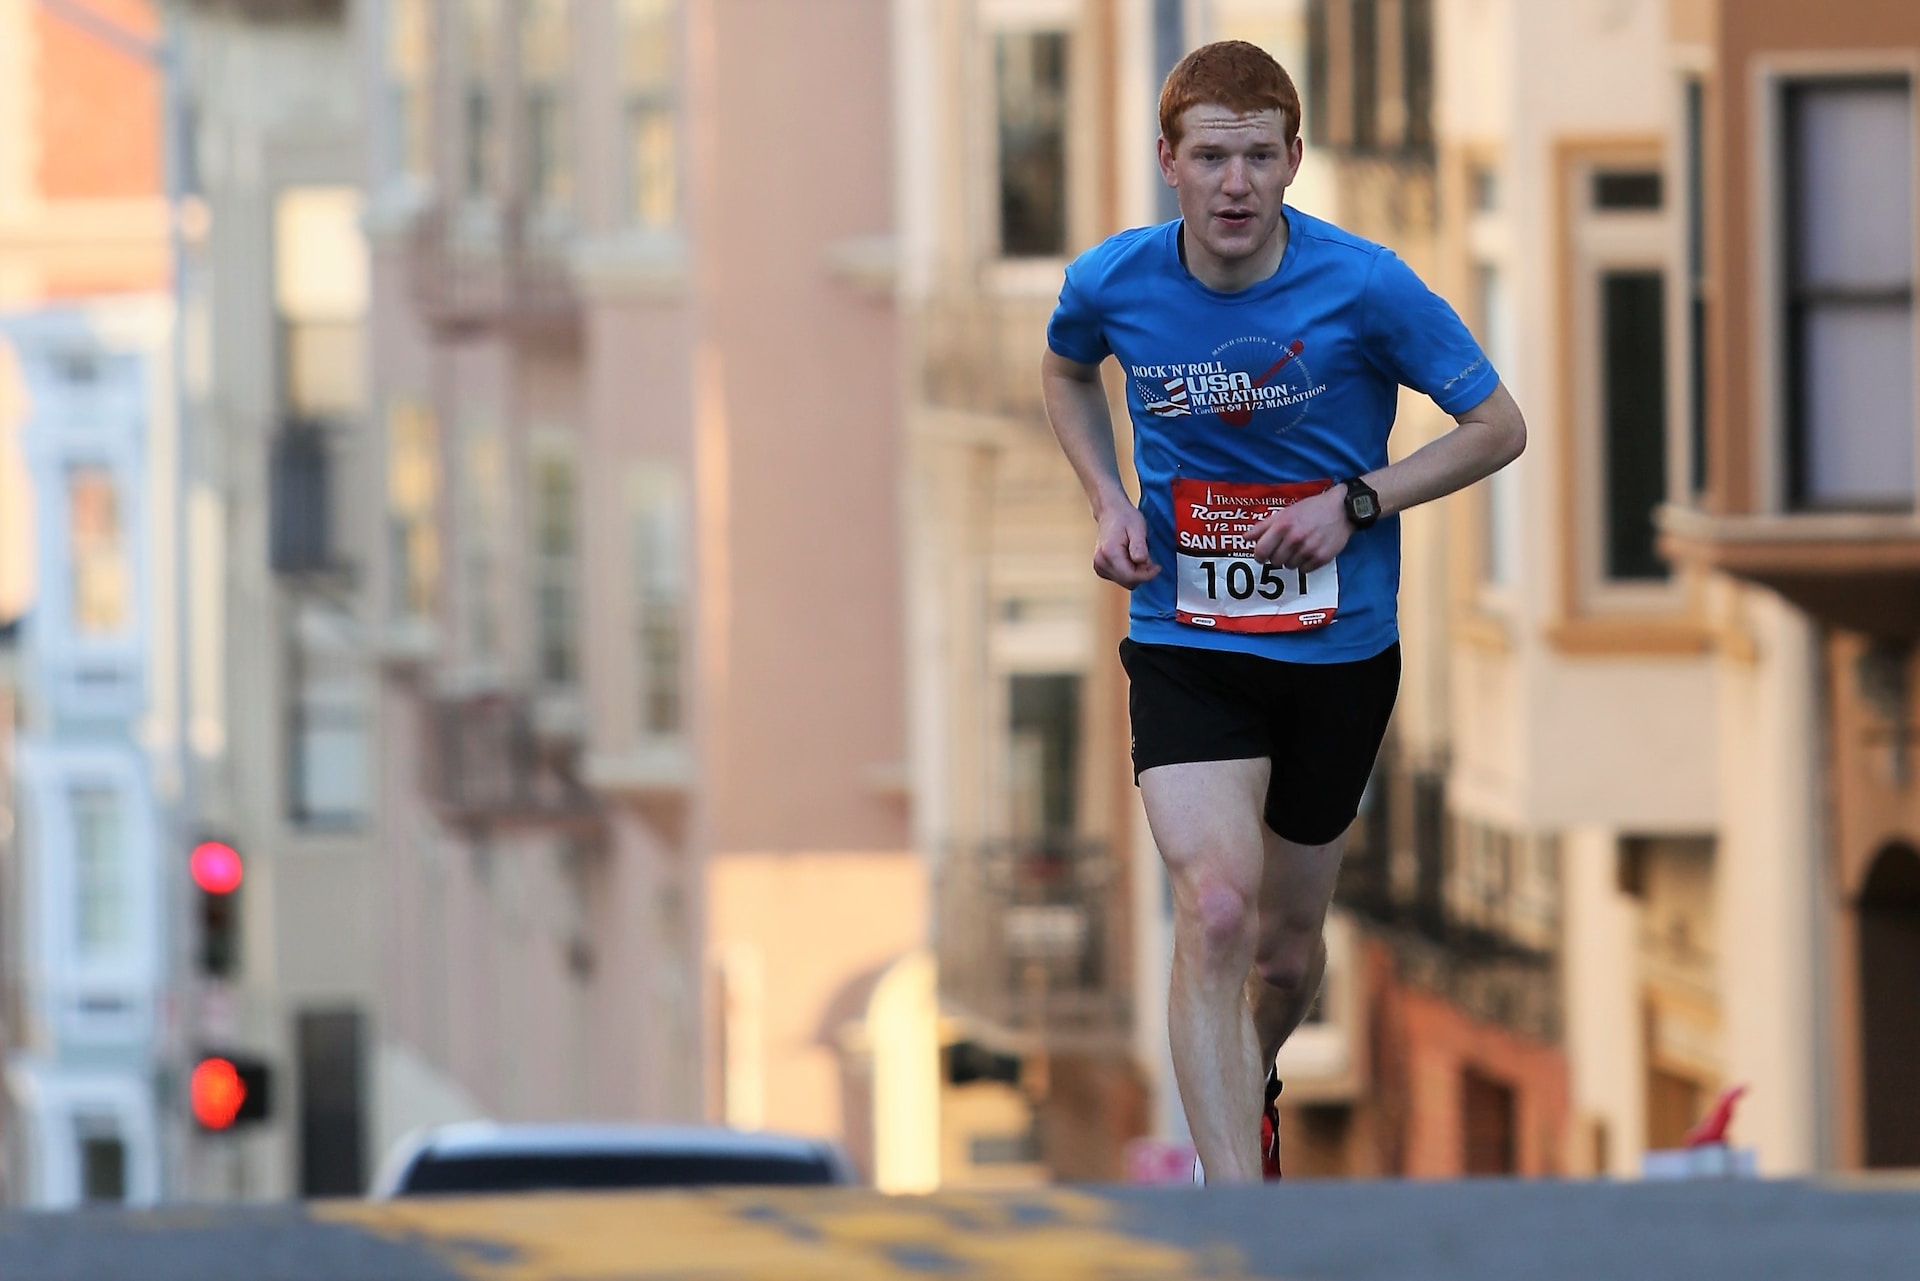 the image shows a man at the running triathlon marathon